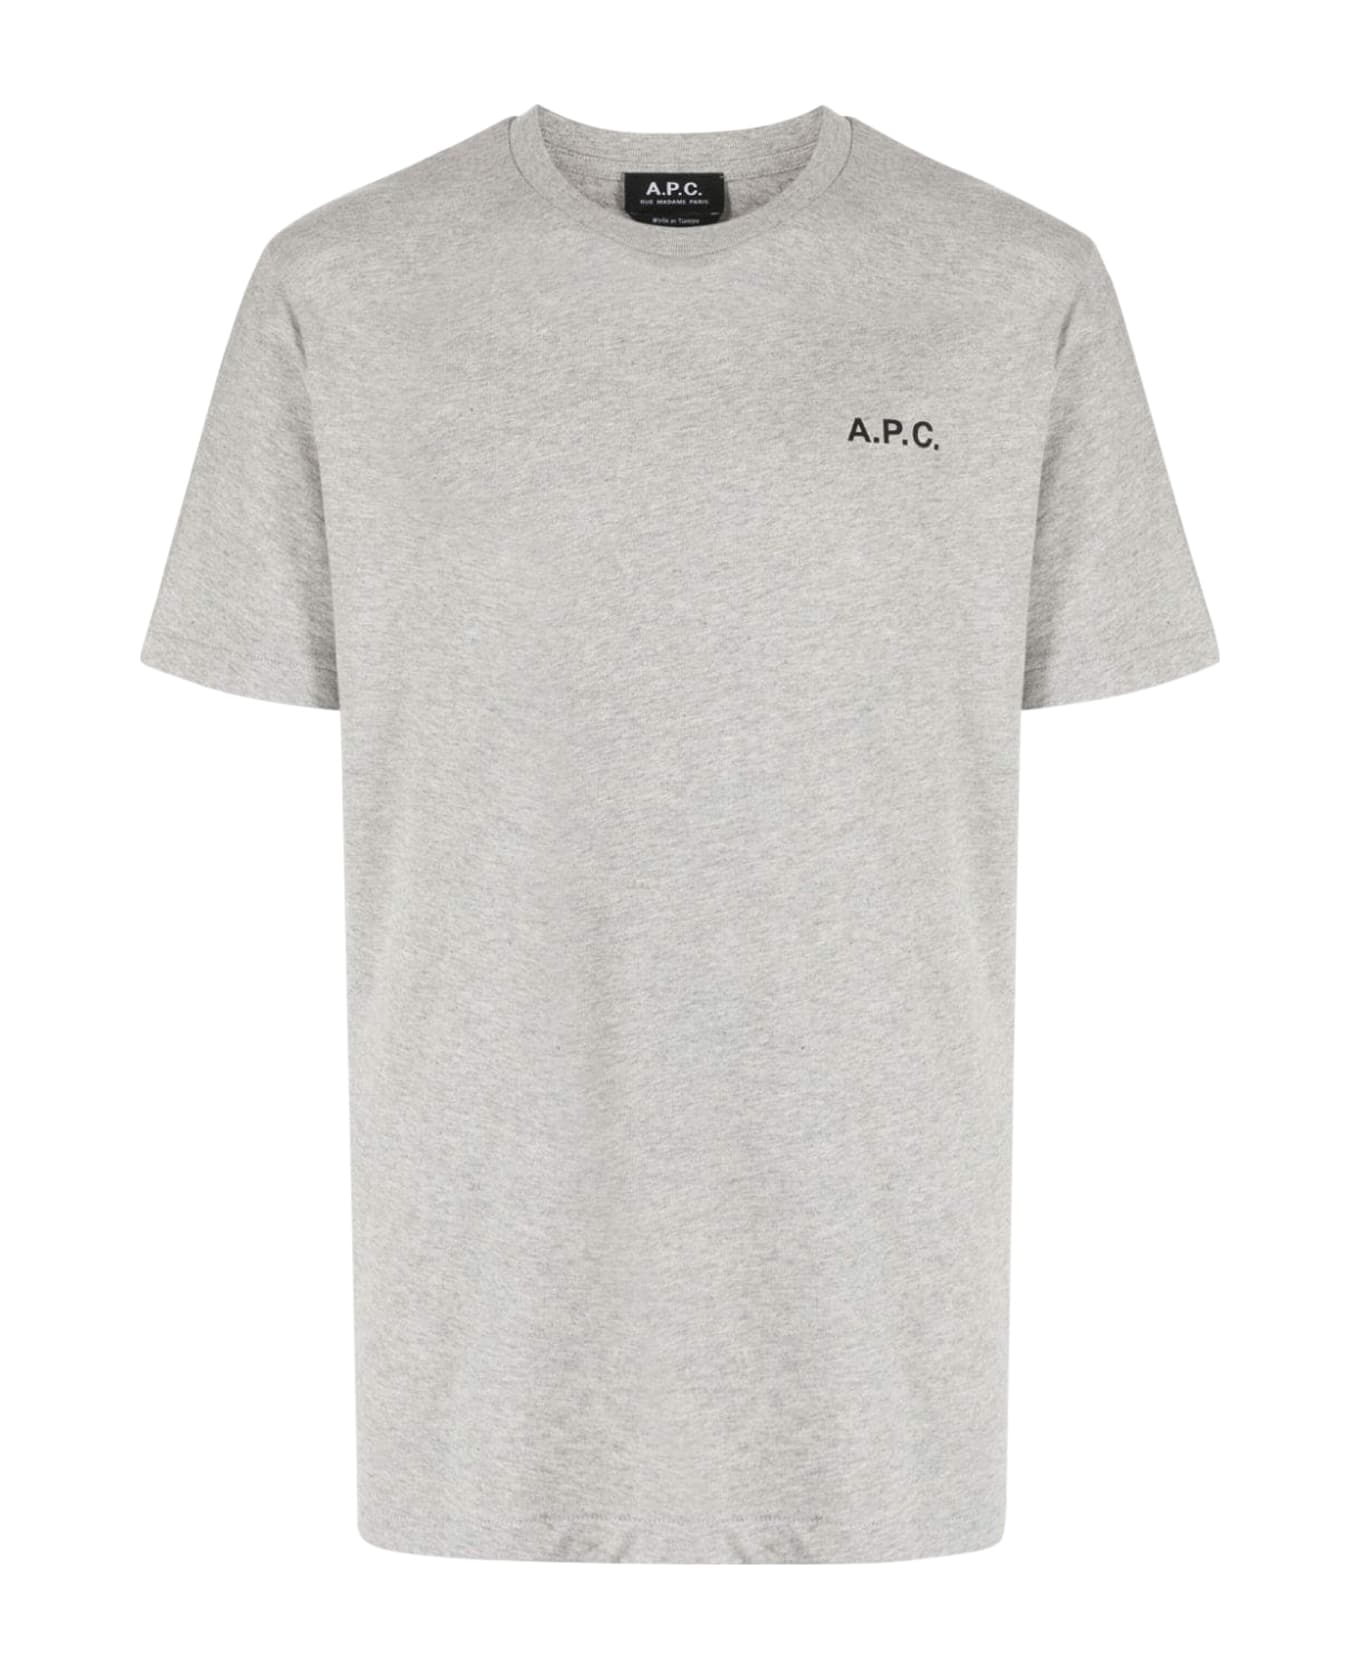 A.P.C. T-shirt Wave - Plb Heathered Light Grey